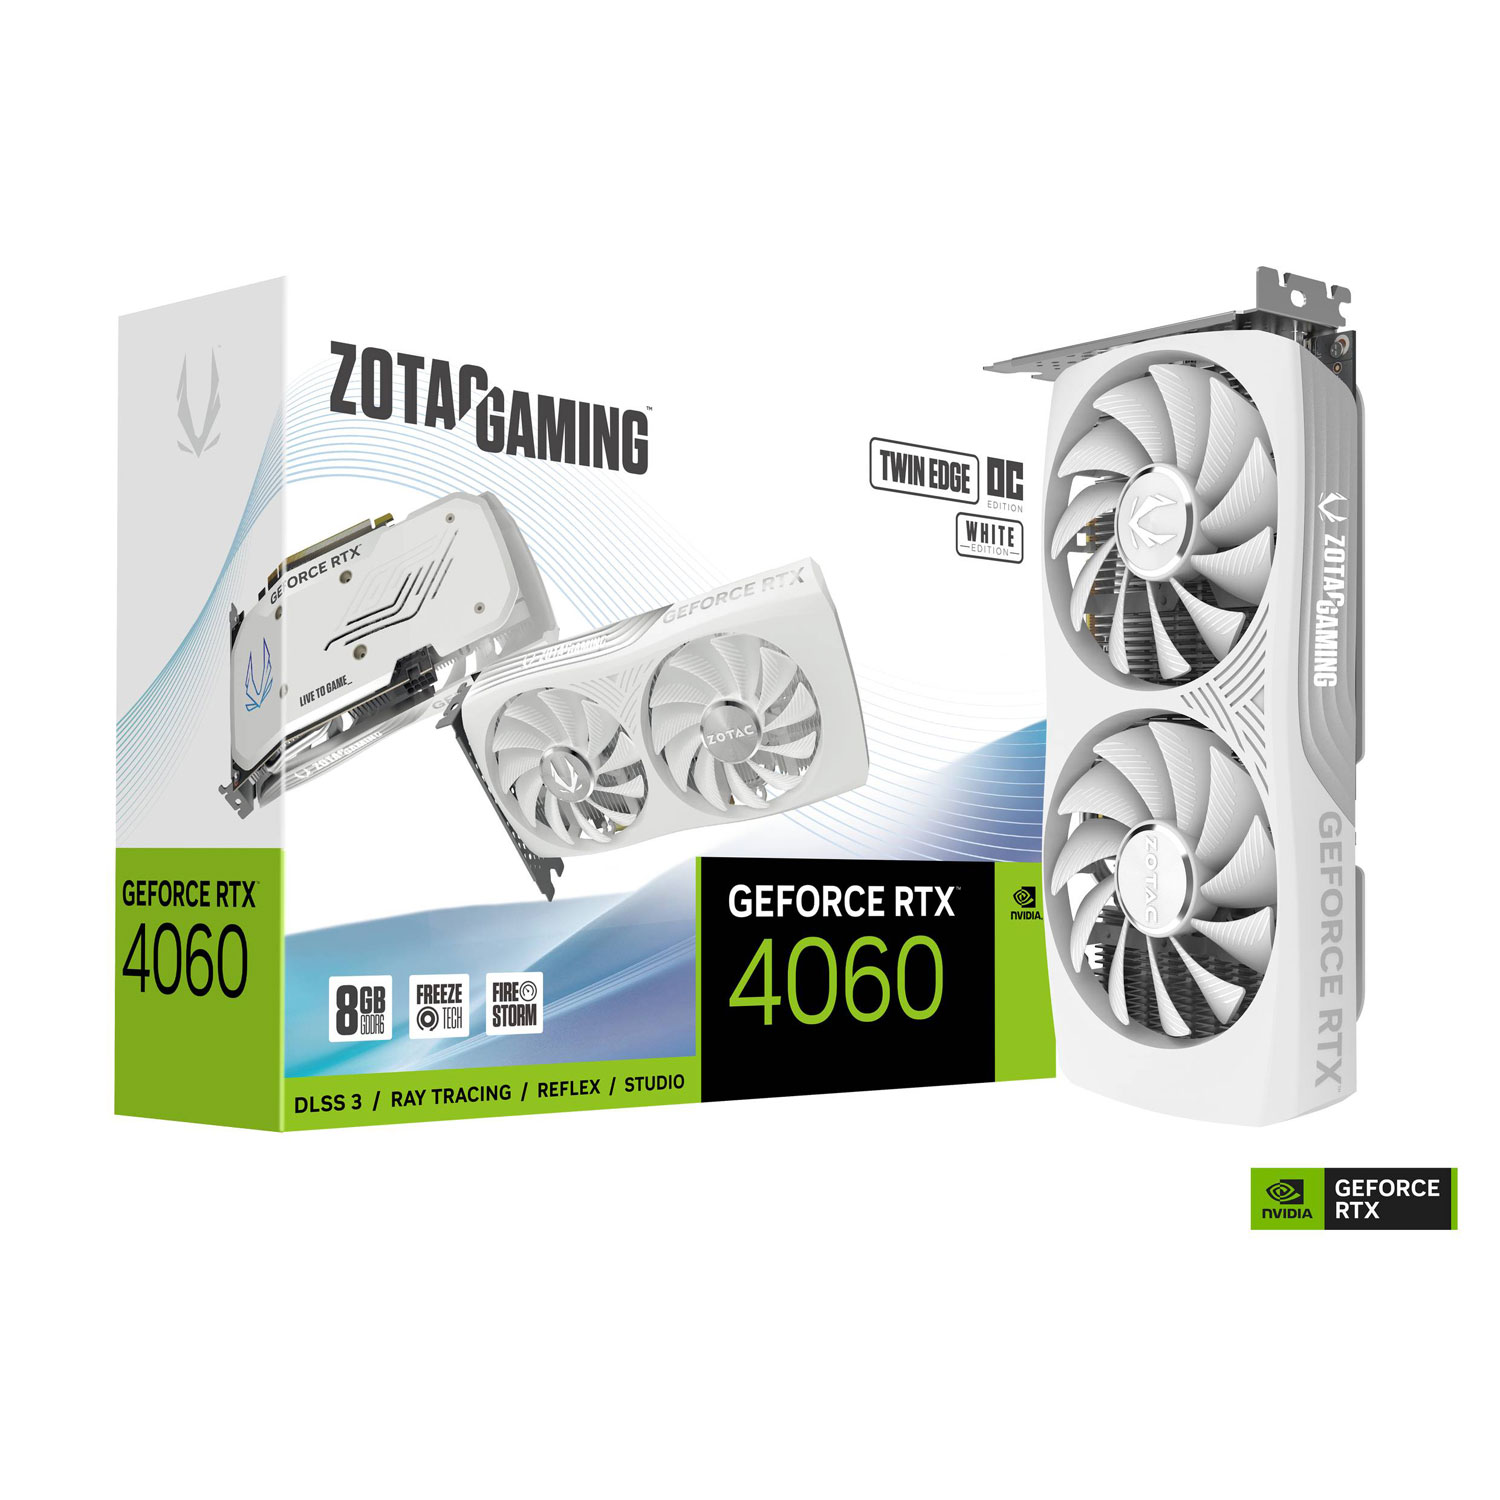 ZOTAC Gaming NVIDIA GeForce RTX4060 8GB GDDR6 Video Card